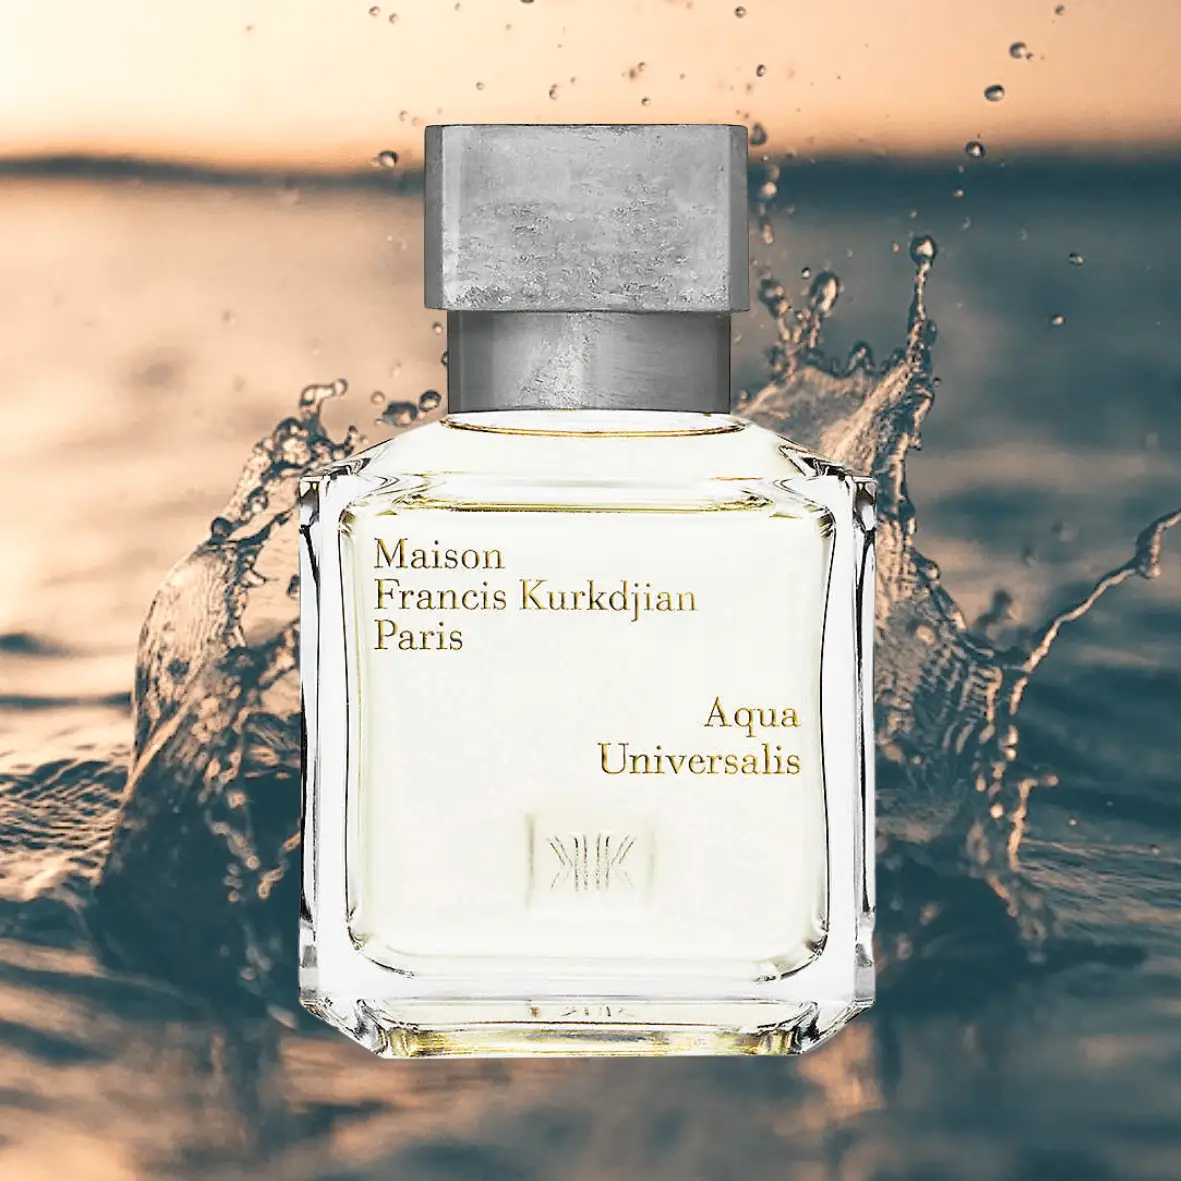 Maison Francis Kurkdjian Aqua Universalis
Perfumes That Smell like Fresh Laundry